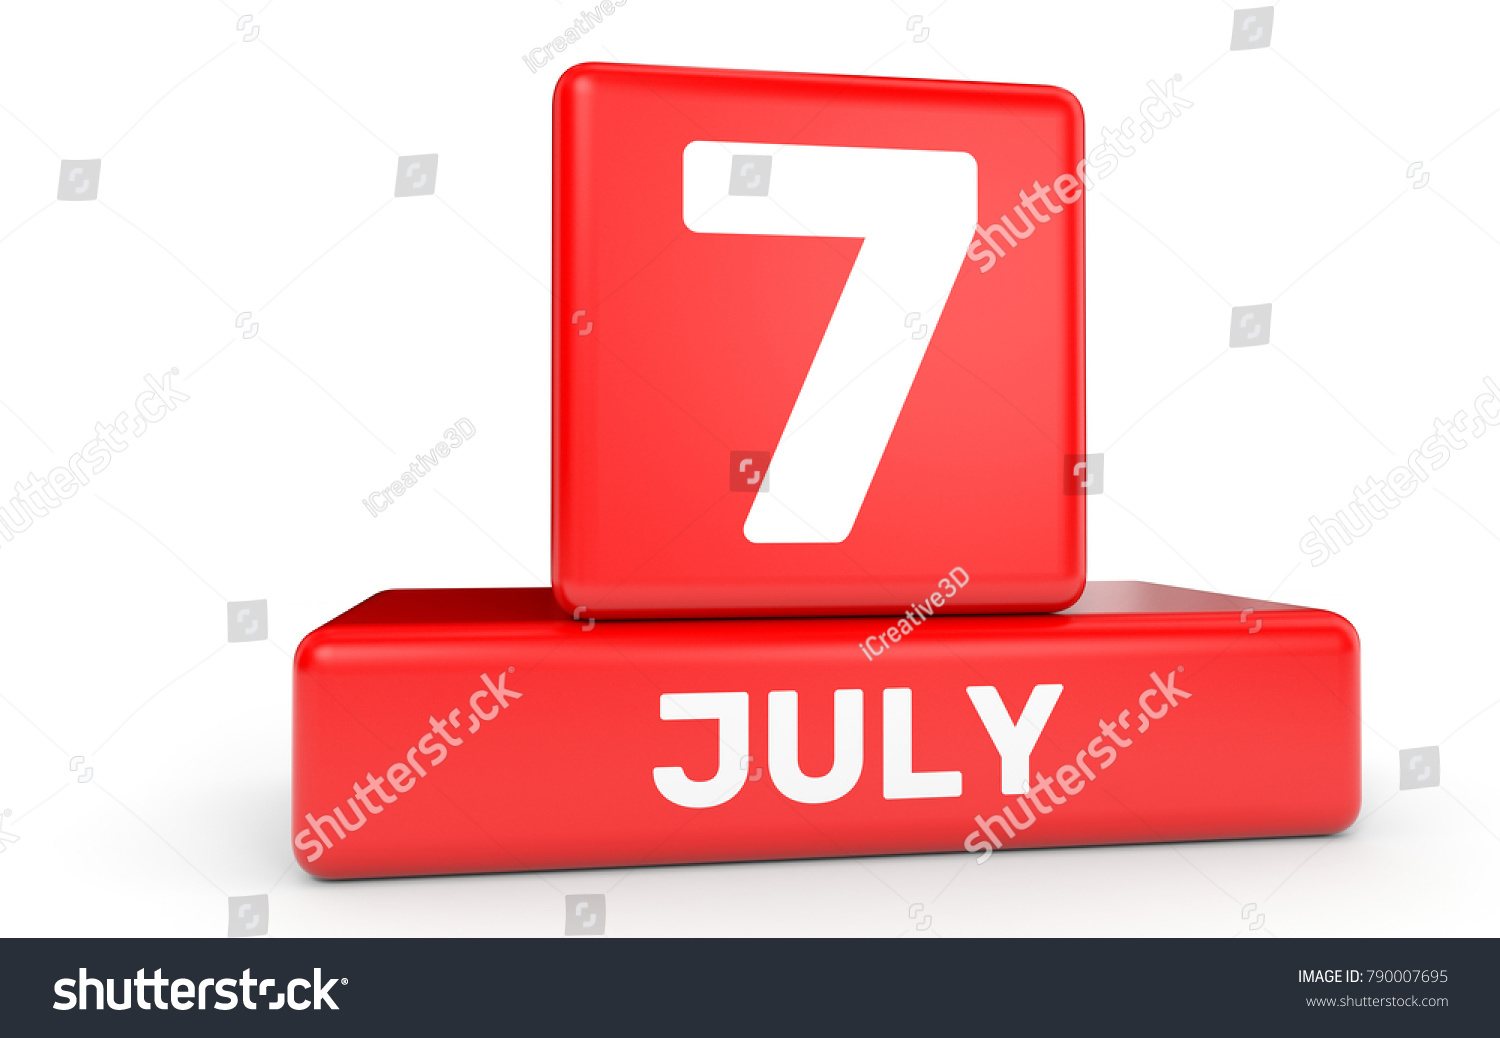 July 7 Calendar On White Background Stock Illustration 790007695